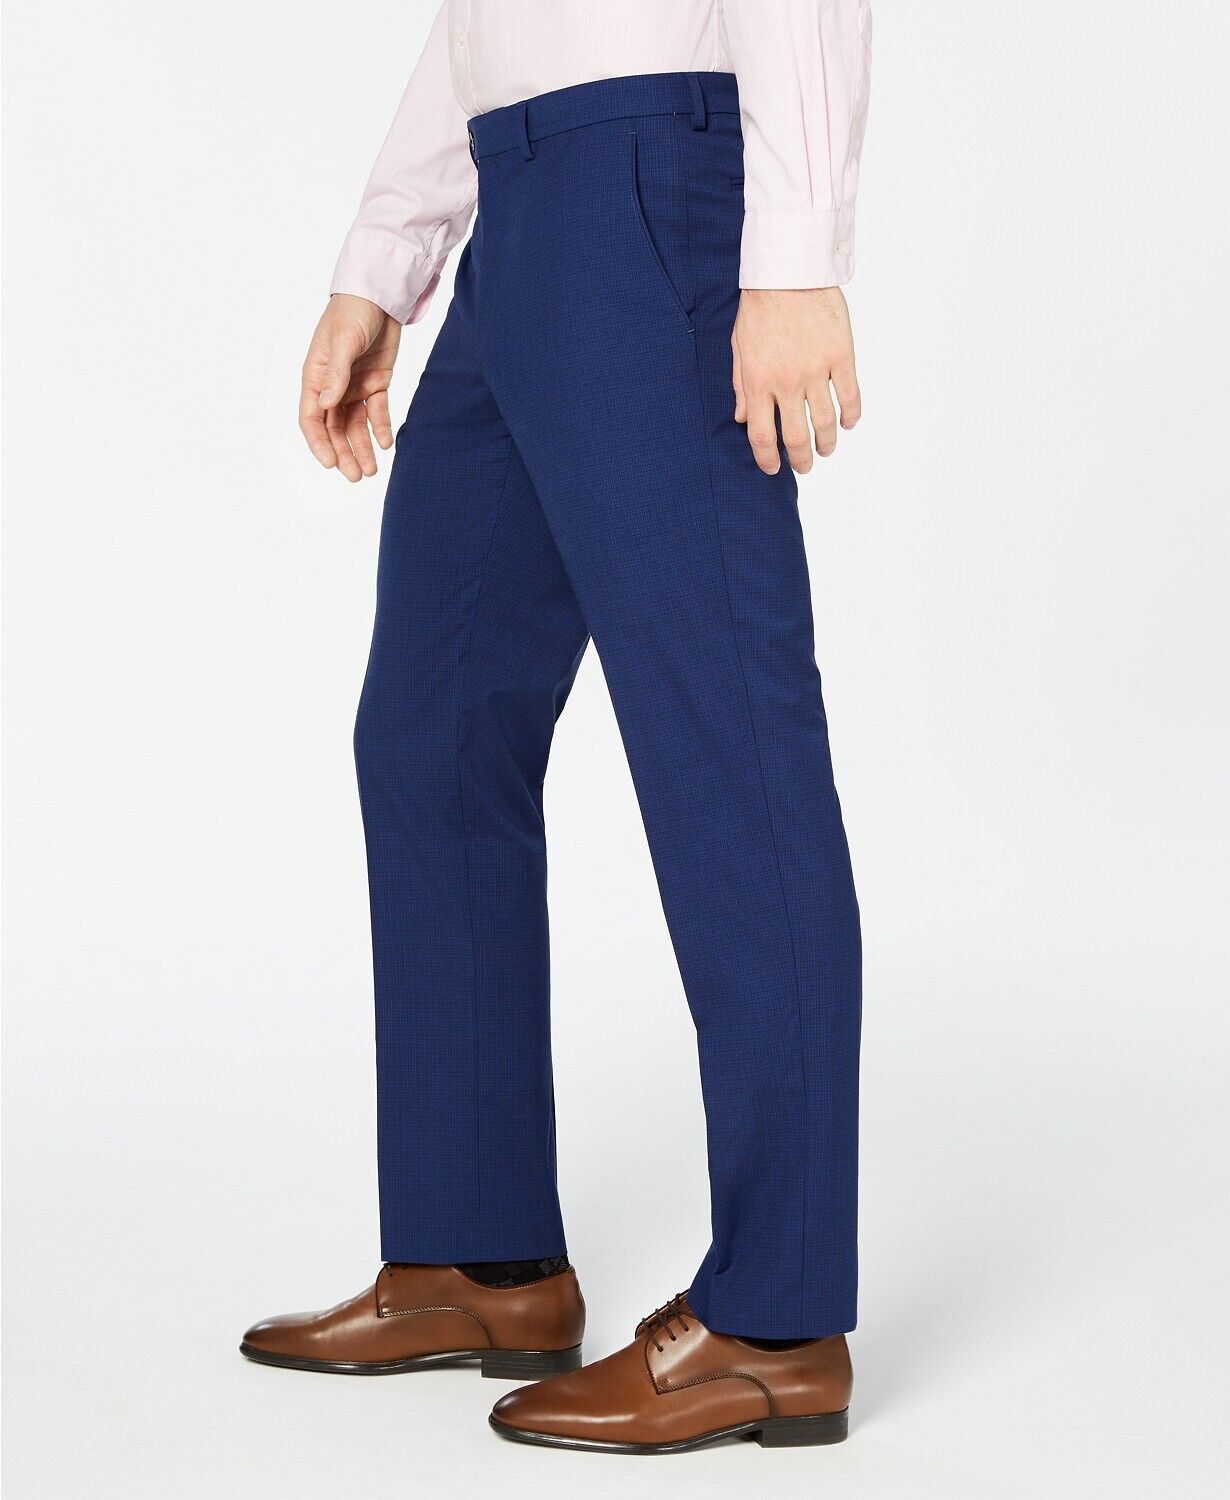 Vince Camuto Slim-Fit Wrinkle-Resistant Blue Check Dress Pants 30 x 30